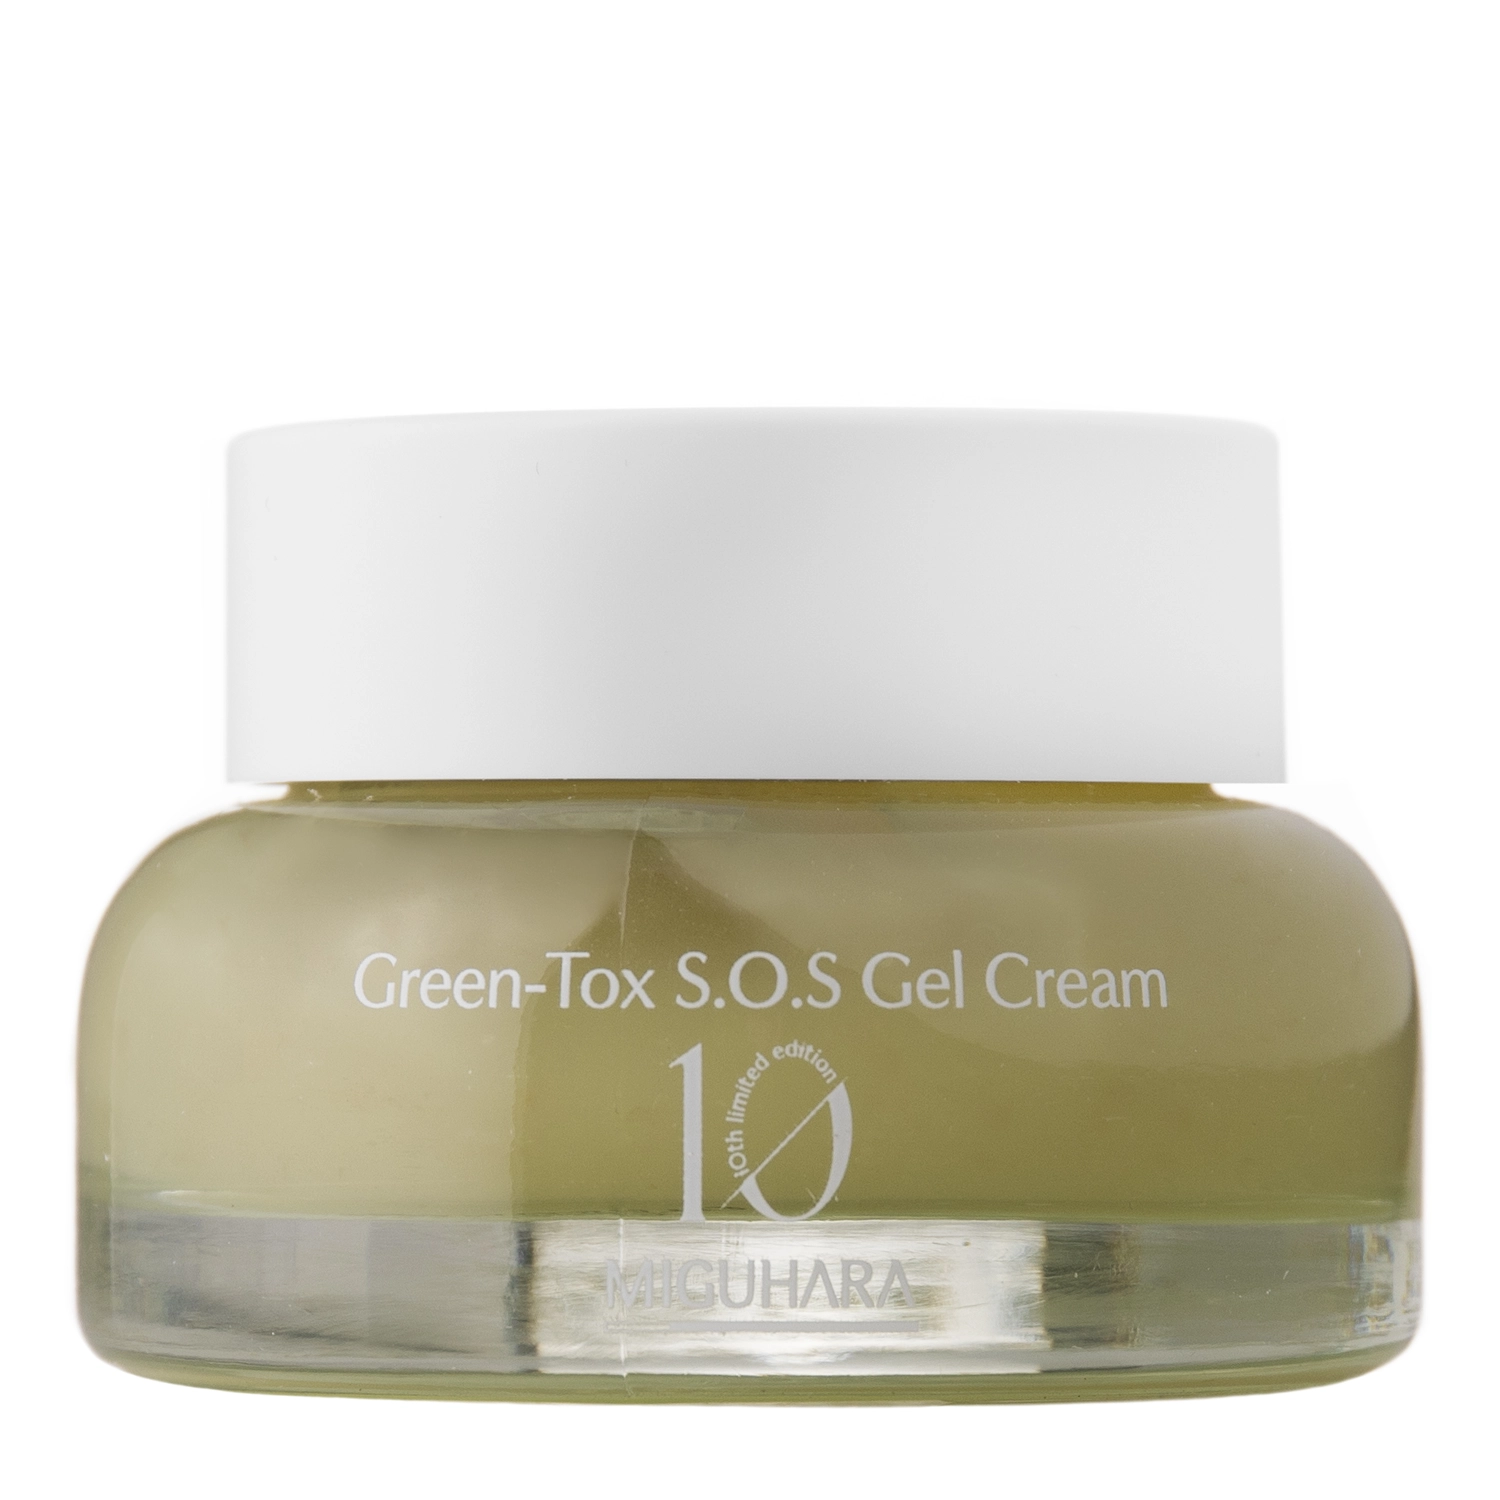 Miguhara - Green-Tox S.O.S Gel Cream - Arckrém-gél Jeju zöld tea kivonattal - 50ml